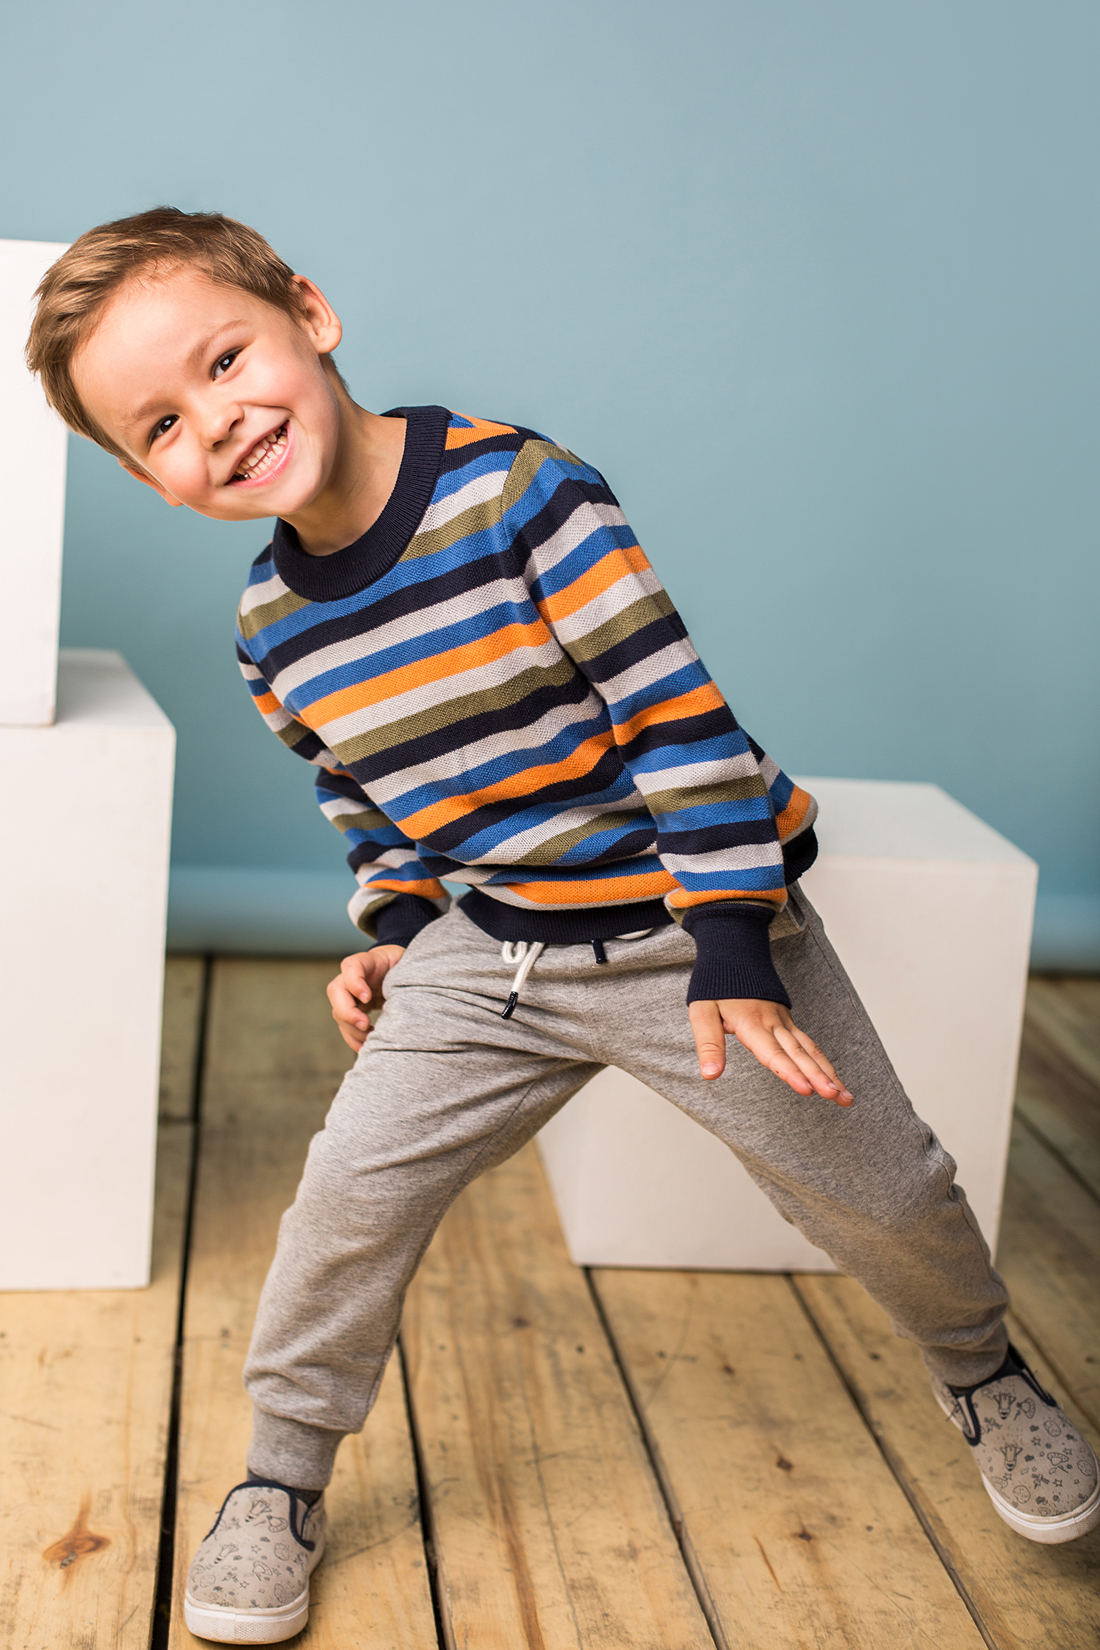 Джемпер для мальчика (арт. baon BK638501), размер 110-116, цвет multicolor striped#многоцветный